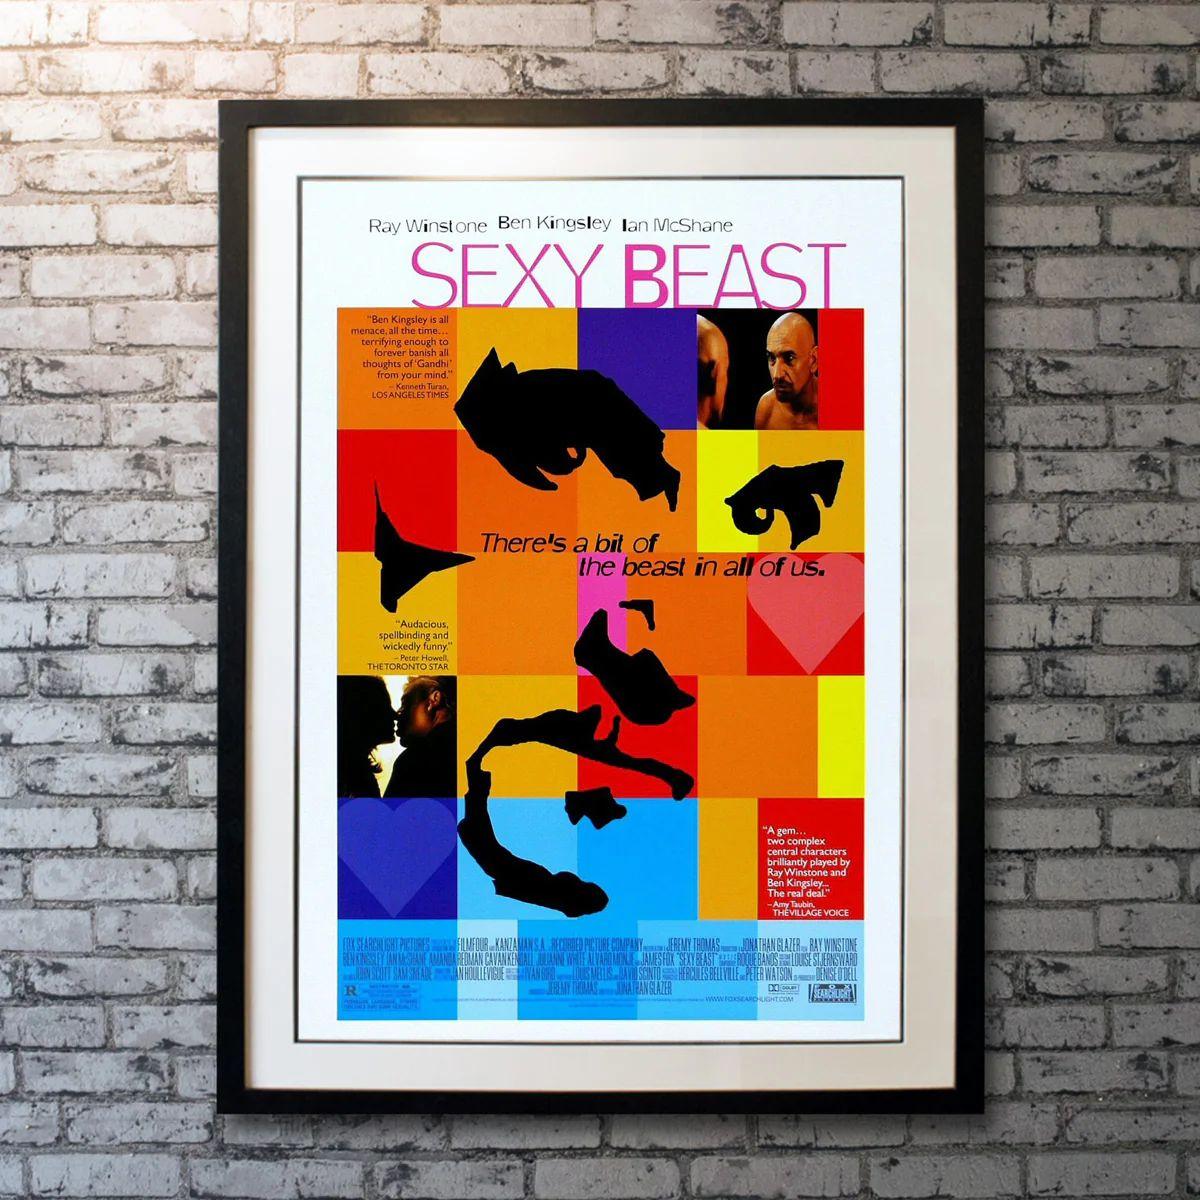 Sexy Beast, Unframed Poster, 2000

Original One Sheet (27 X 40 Inches). Brutal gangster Don Logan recruits 